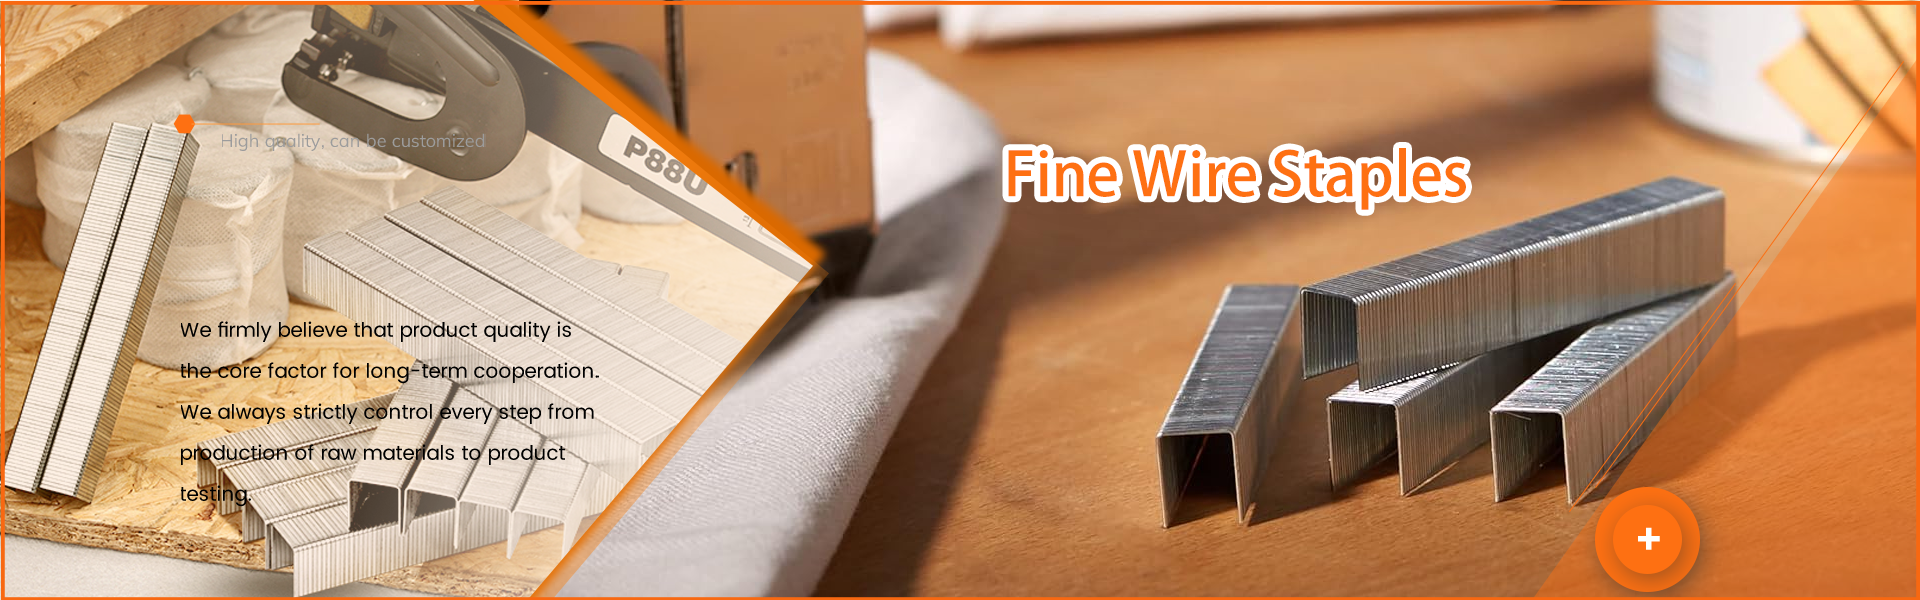 fine wire staples